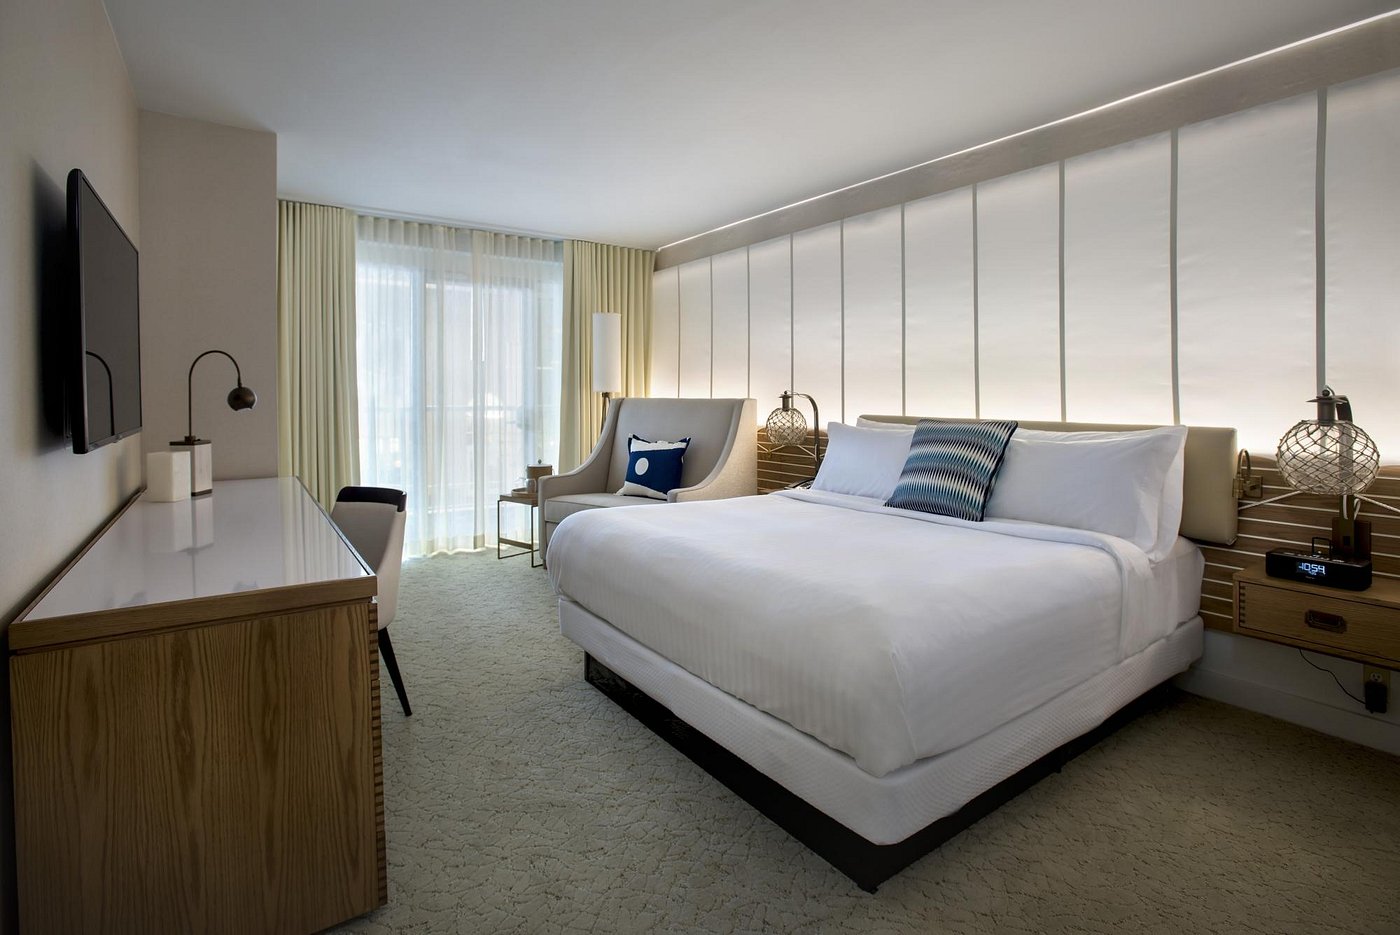 Newport Marriott Hotel & Spa Rooms: Pictures & Reviews - Tripadvisor